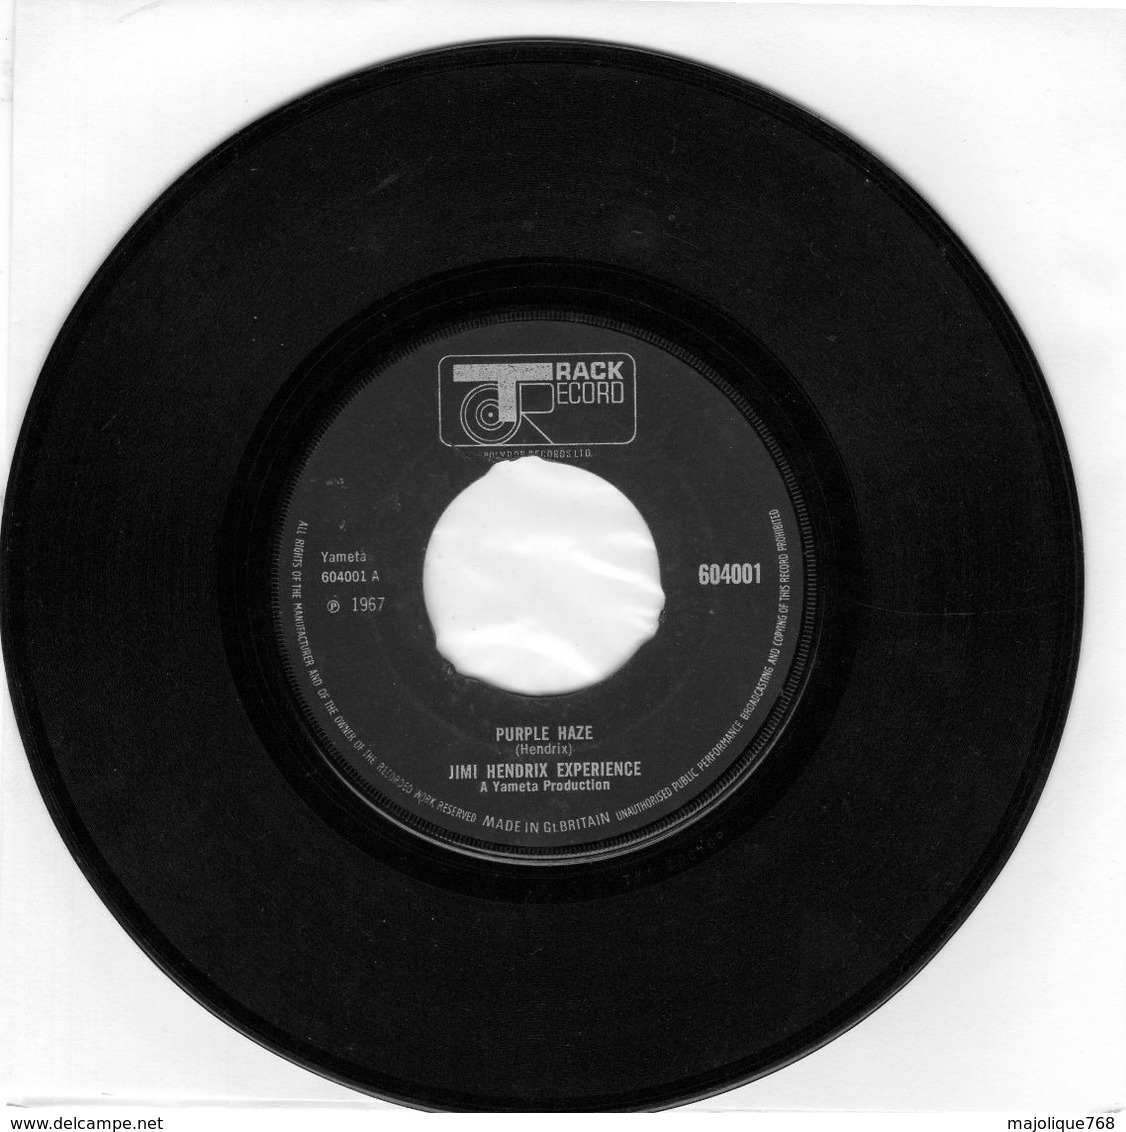 Disque  45 T - SP - Jimi Hendrix Expérience - Purple Haze - Track Records 604001 - 1967 UK  Black-label - - Rock